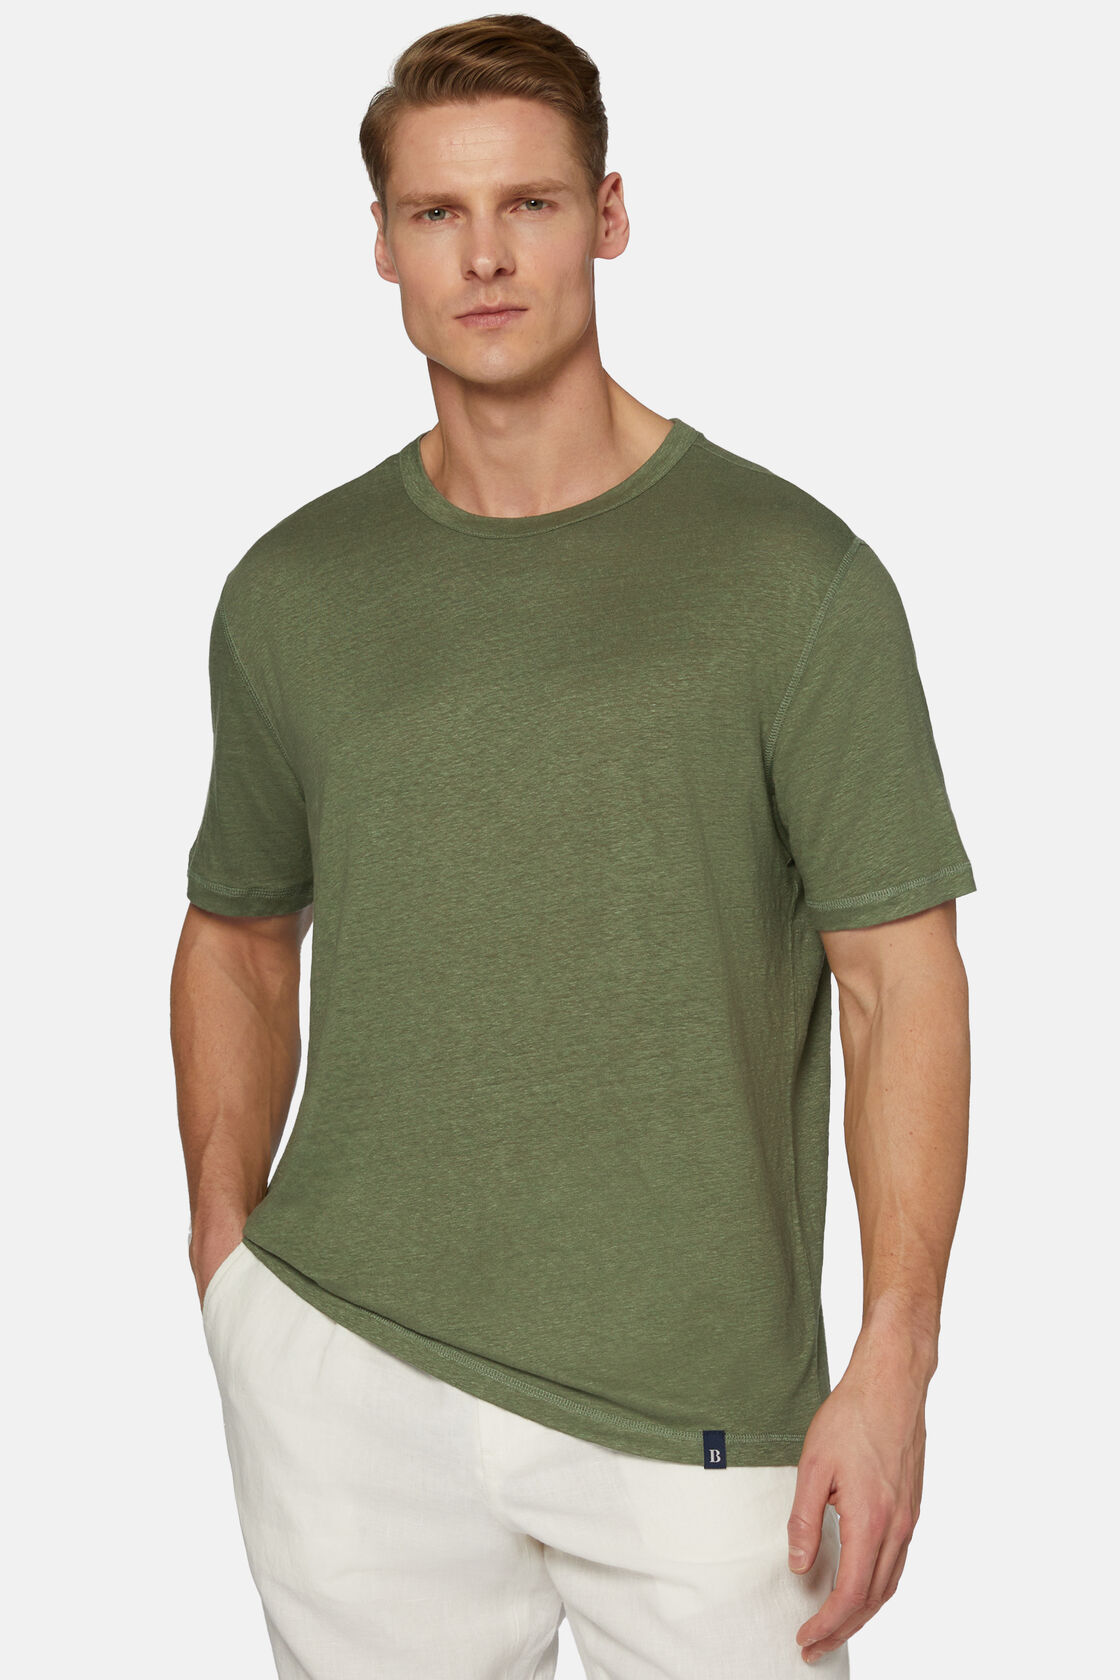 T-Shirt Aus Stretch-Leinen-Jersey, Militärgrün, hi-res